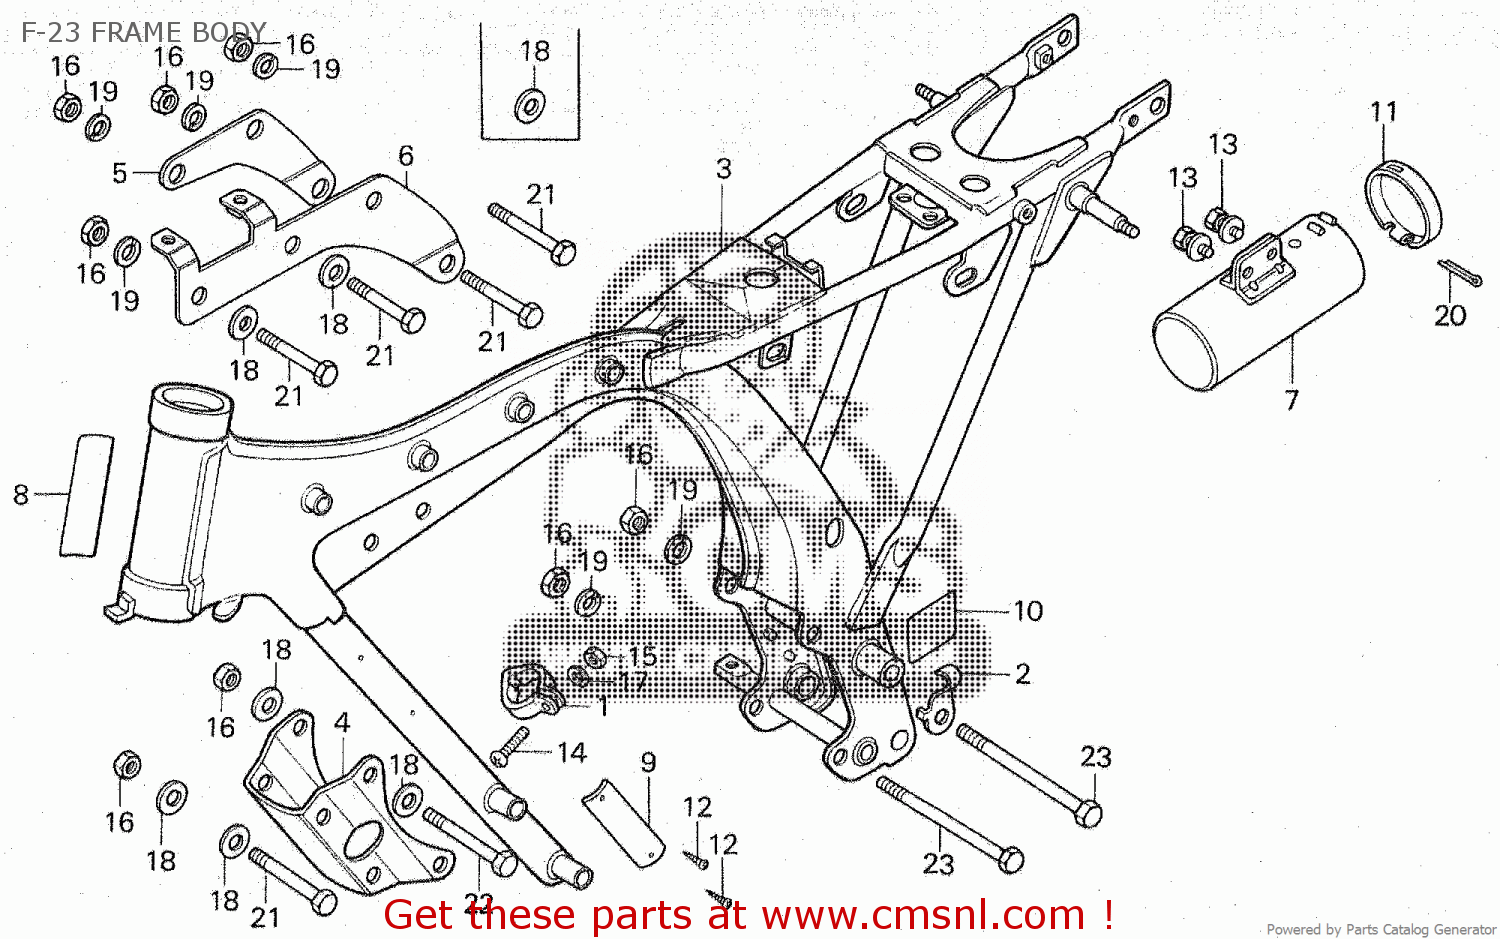 La CG d'Averell... - Page 2 Honda-cg125-general-export-f-23-frame-body_big3IMG01171787_85f0